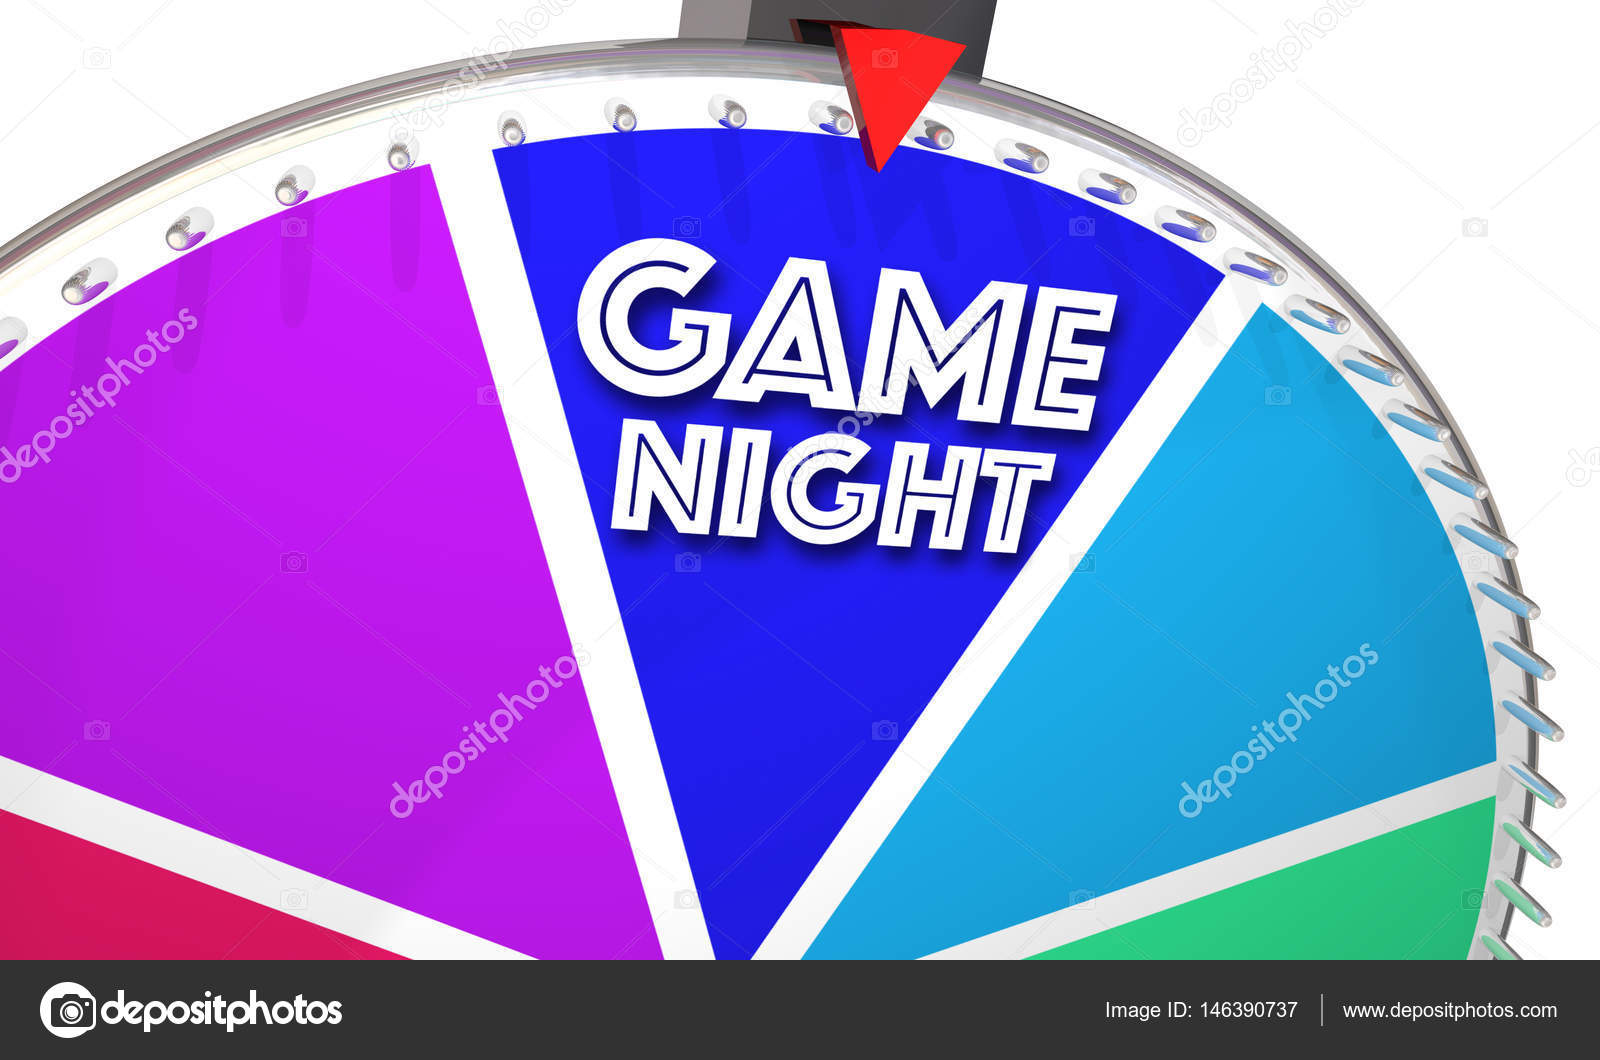 Game night Stock Photos, Royalty Free Game night Images | Depositphotos